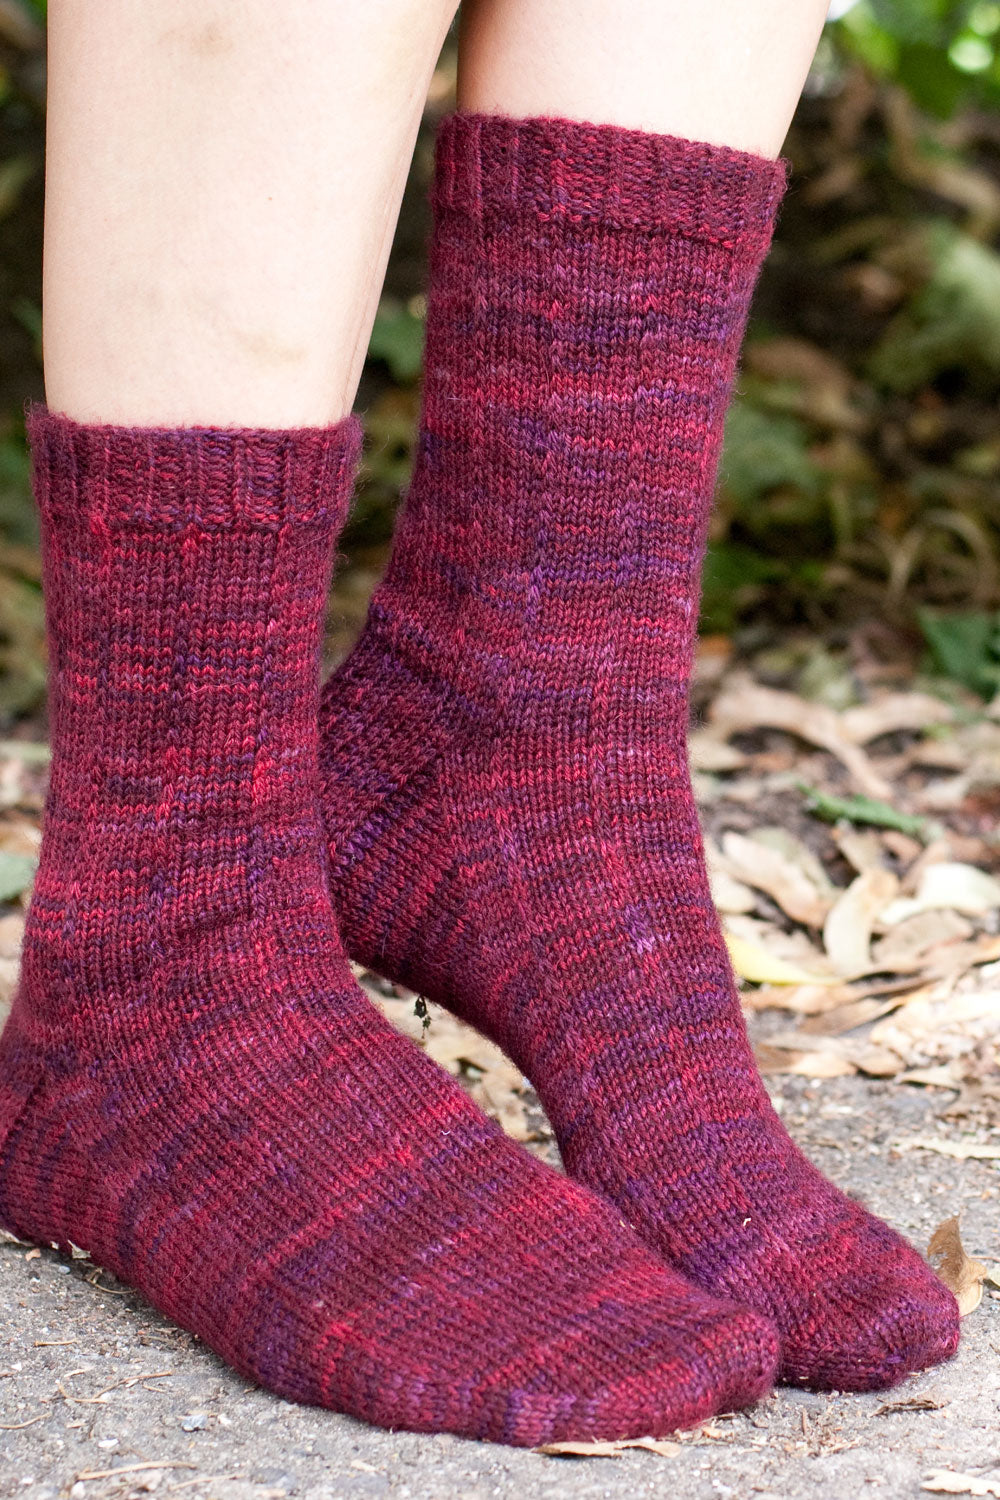 Socks knit with Pizzicato sock yarn in Palestra (purple/pink)